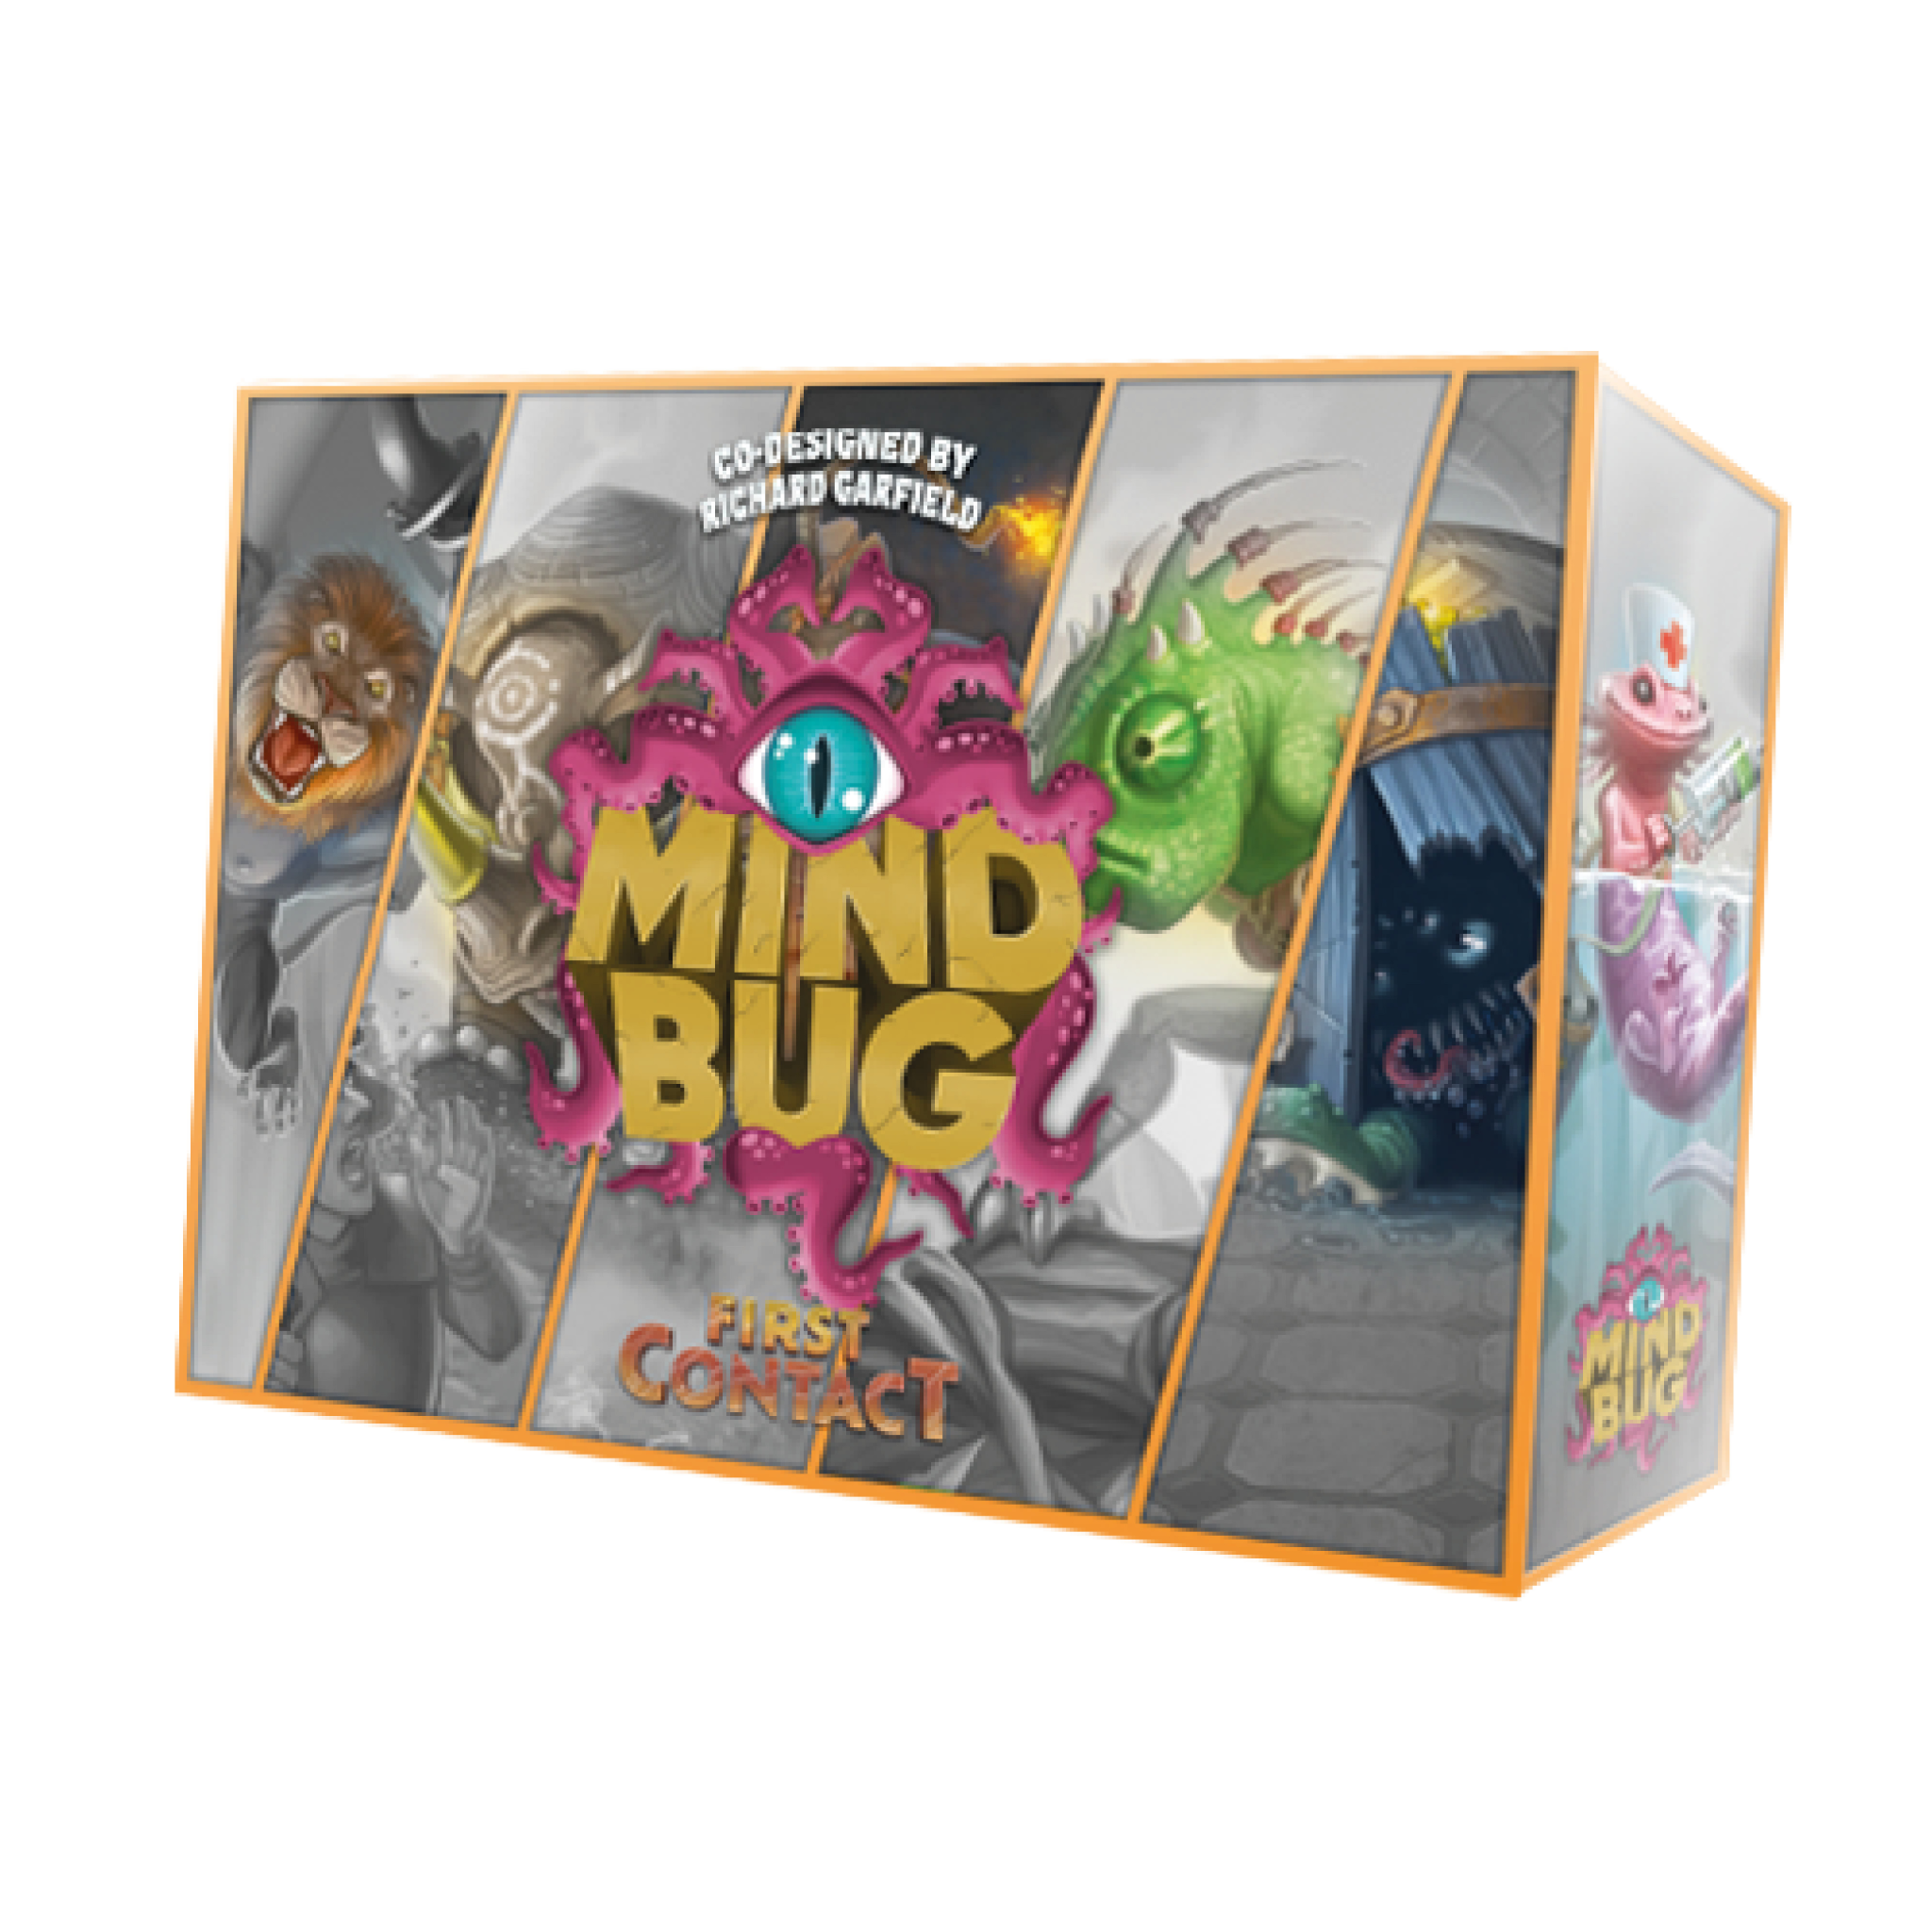 Mindbug - Base Set First Contact (Duelist Edition)